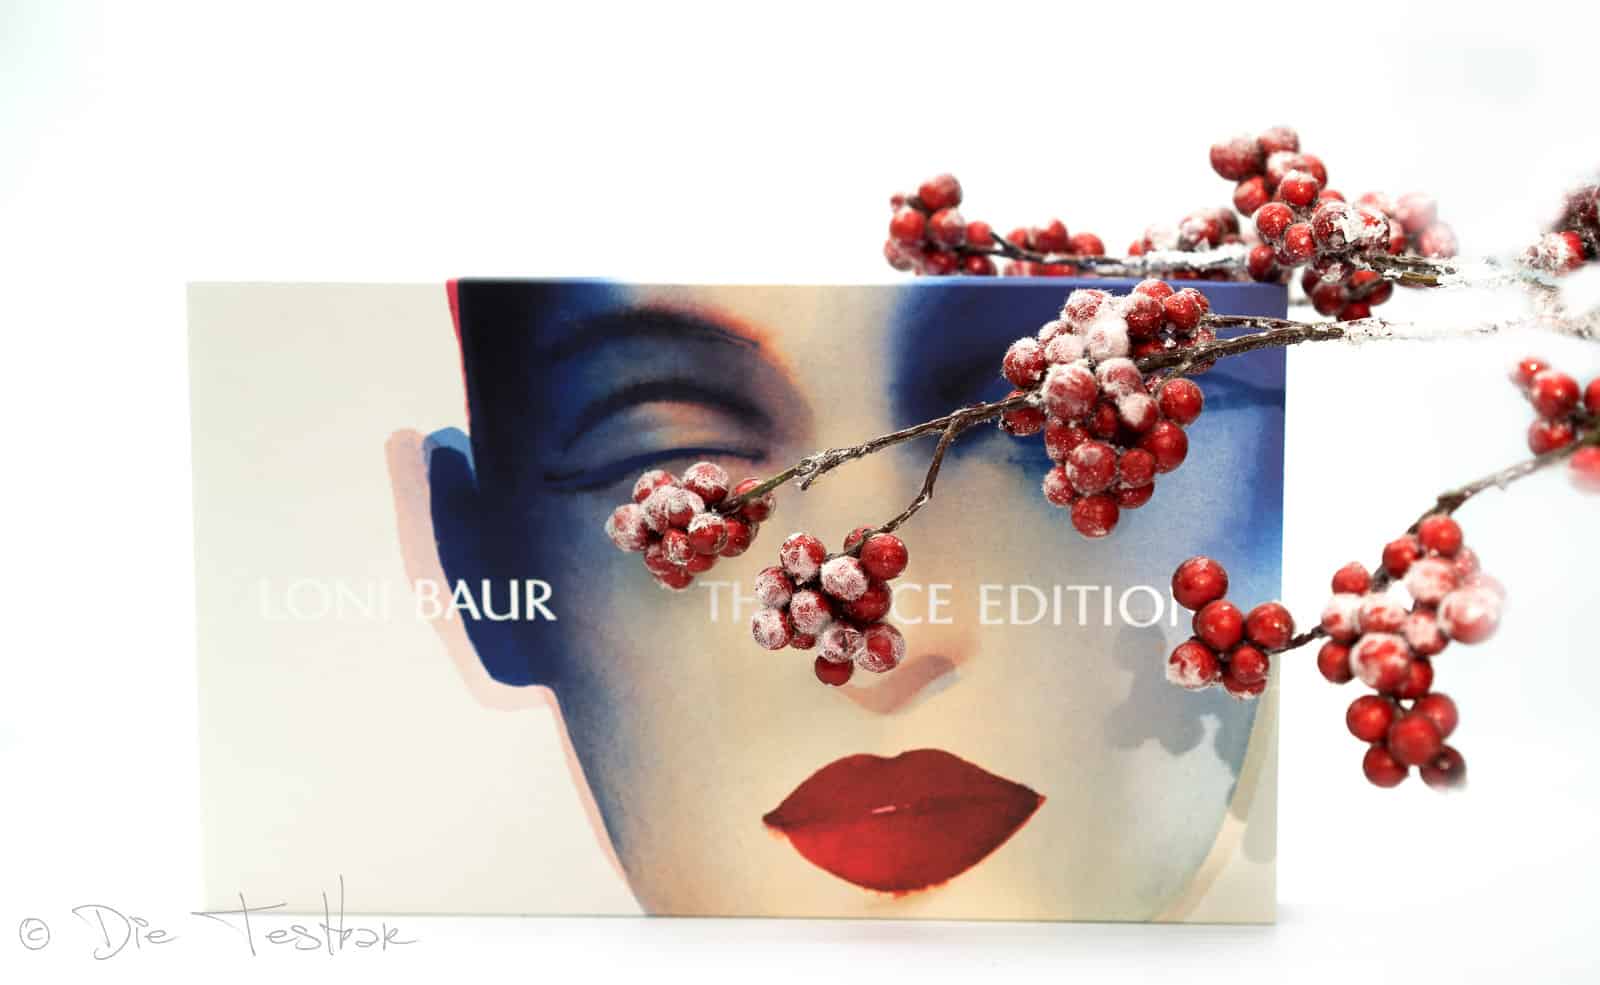 Make-up-Artist in Palettenform – Full-Look-Palette – THE FACE EDITION No 2 - Get reddy von LONI BAUR 9